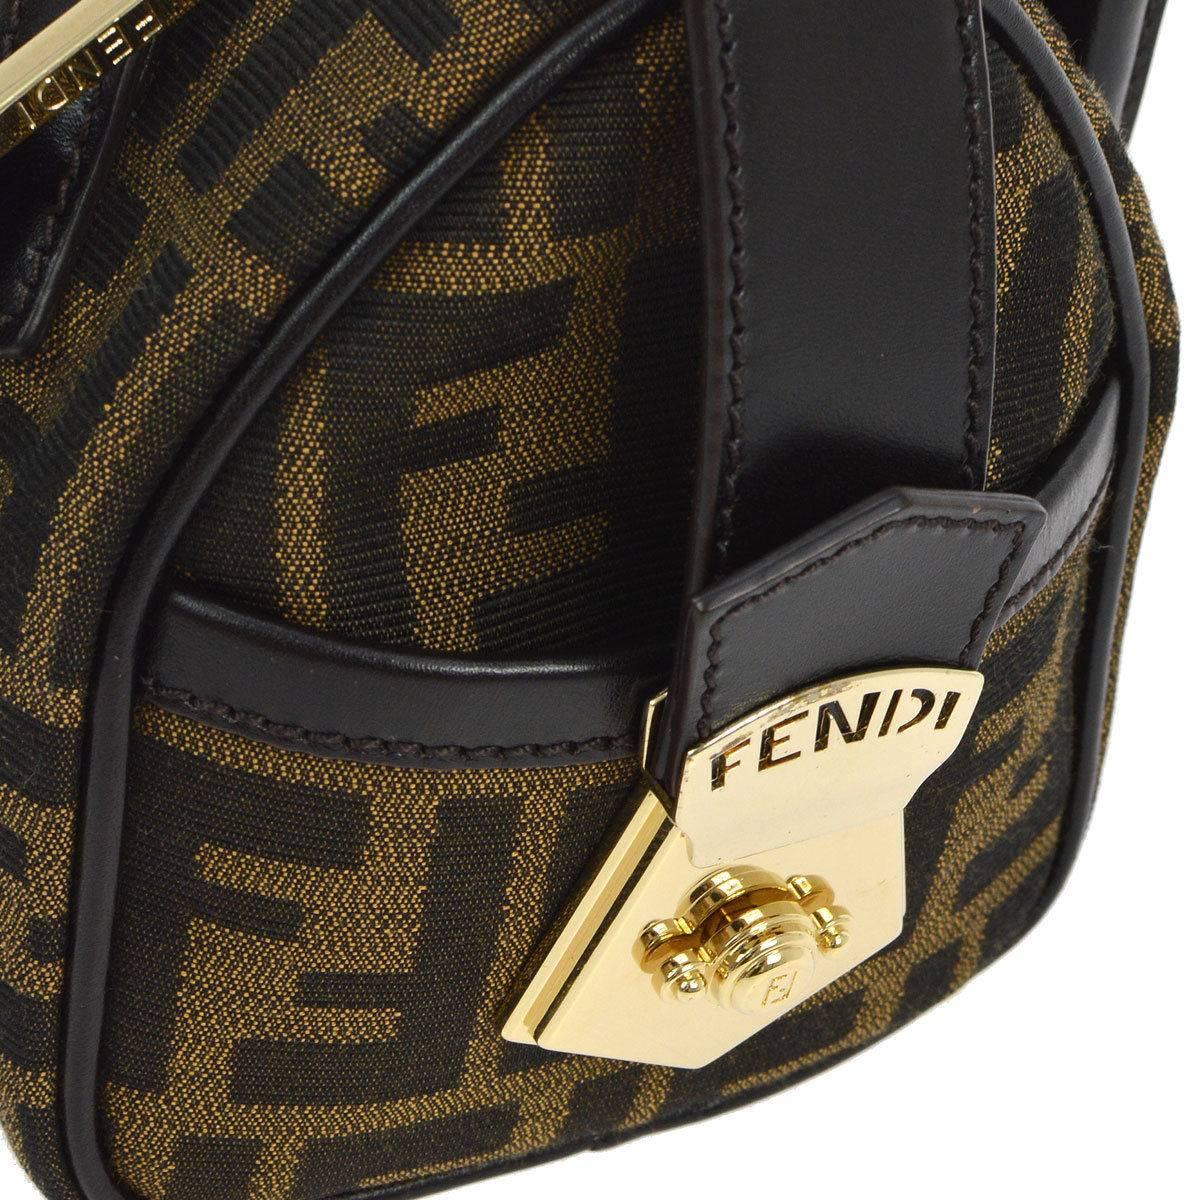 Fendi Monogram Logo Black Evening Speedy Style Top Handle Satchel Bag

Monogram canvas
Leather trim
Gold tone hardware
Woven lining
Made in Italy
Handle drop 3